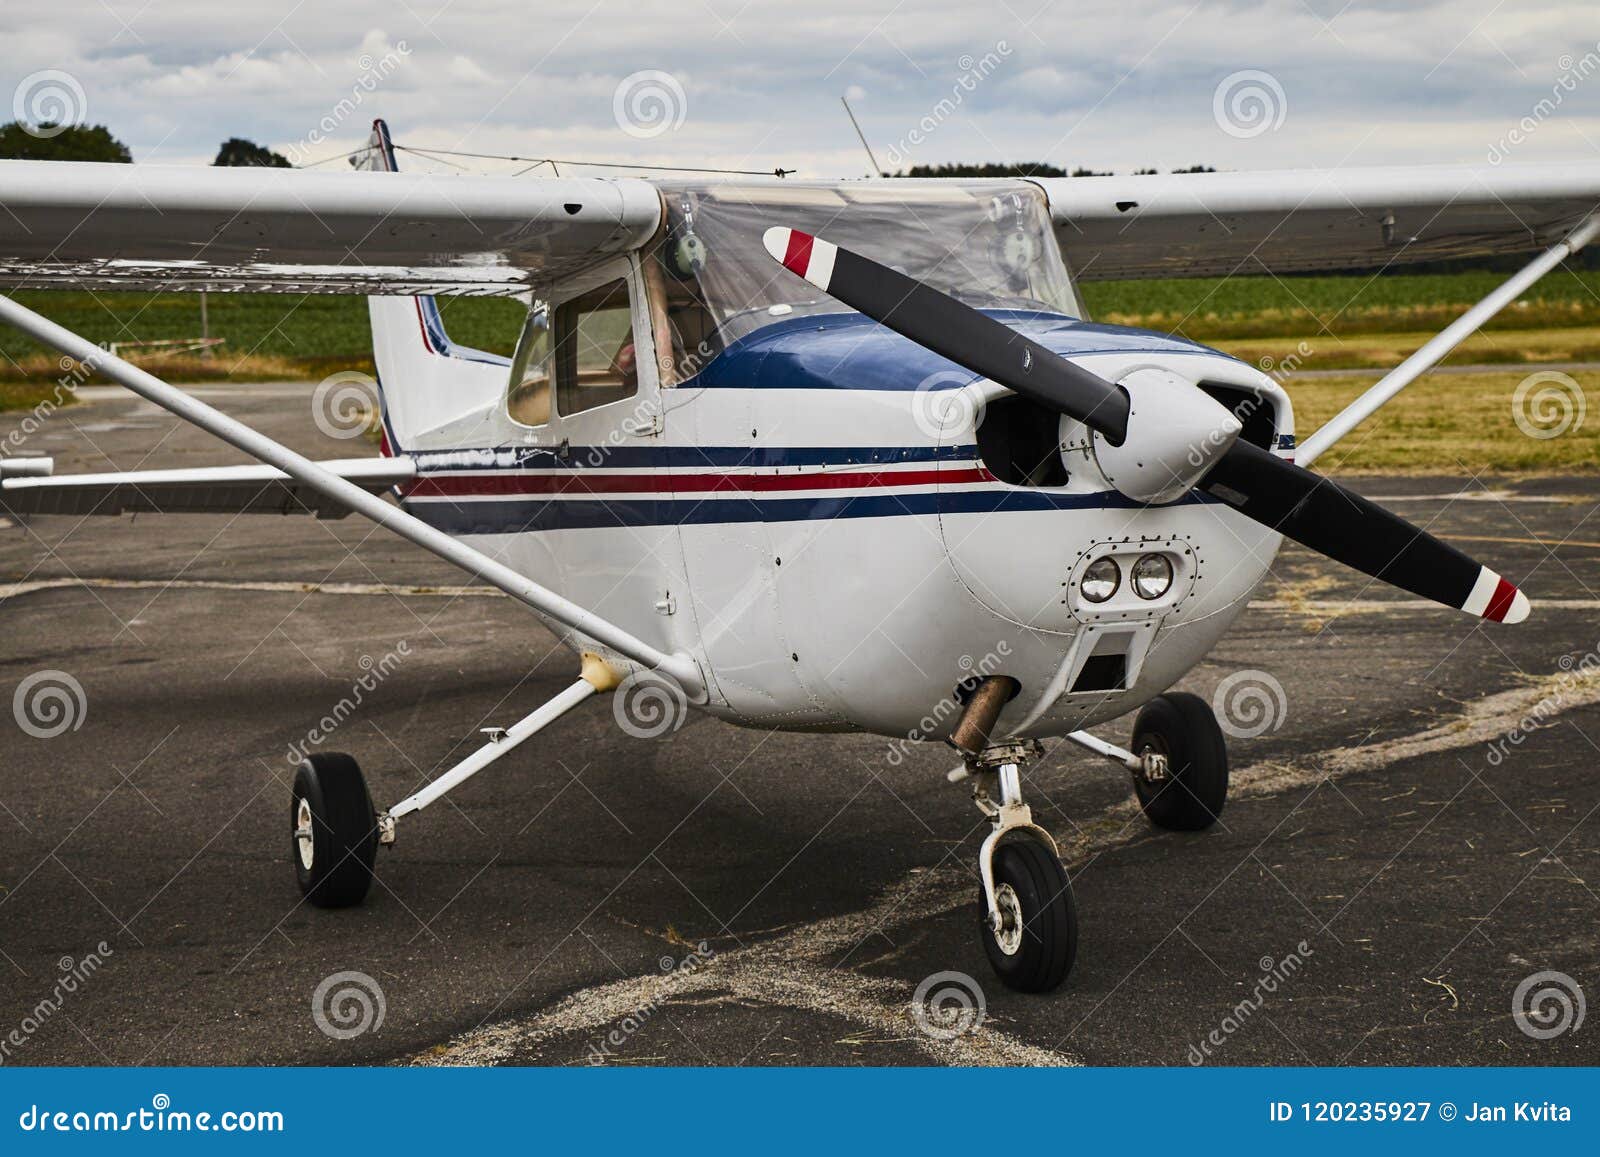 Cessna 172 Skyhawk 2 Airplane On An Asphalt Runway Stock